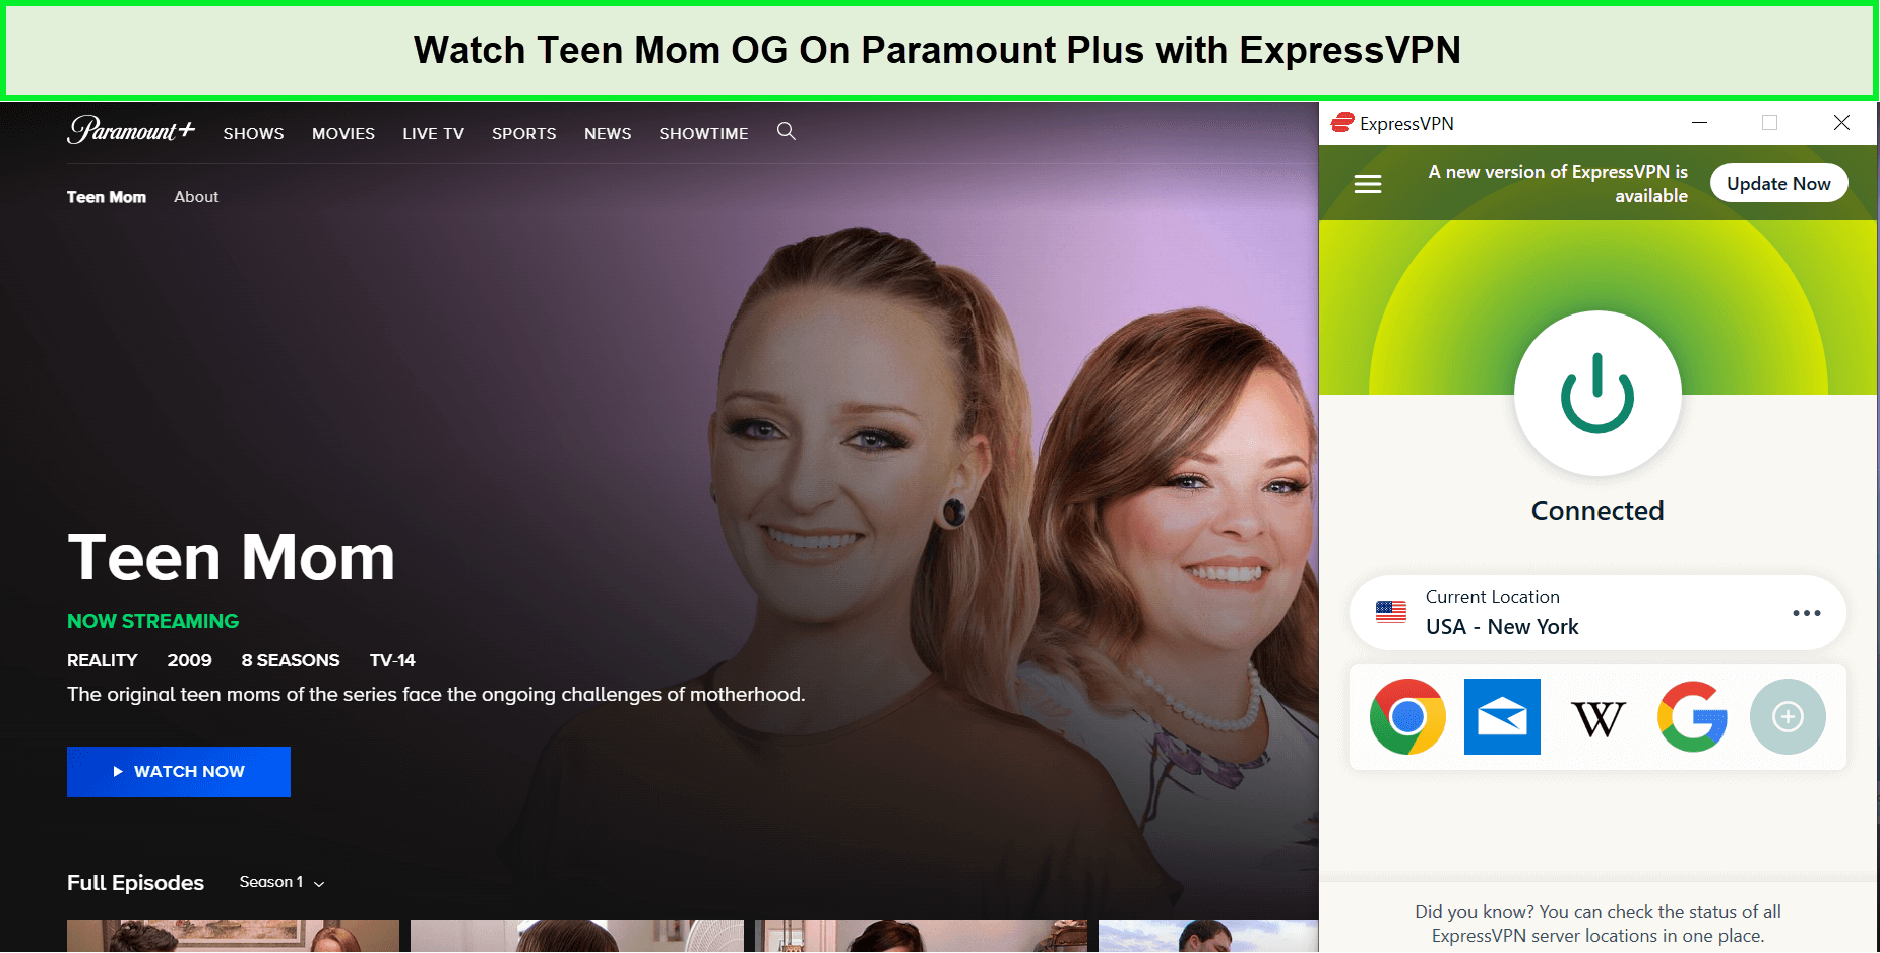 Watch-Teen-Mom-OG-Season-9-in-Hong Kong-On-Paramount-Plus-with-ExpressVPN